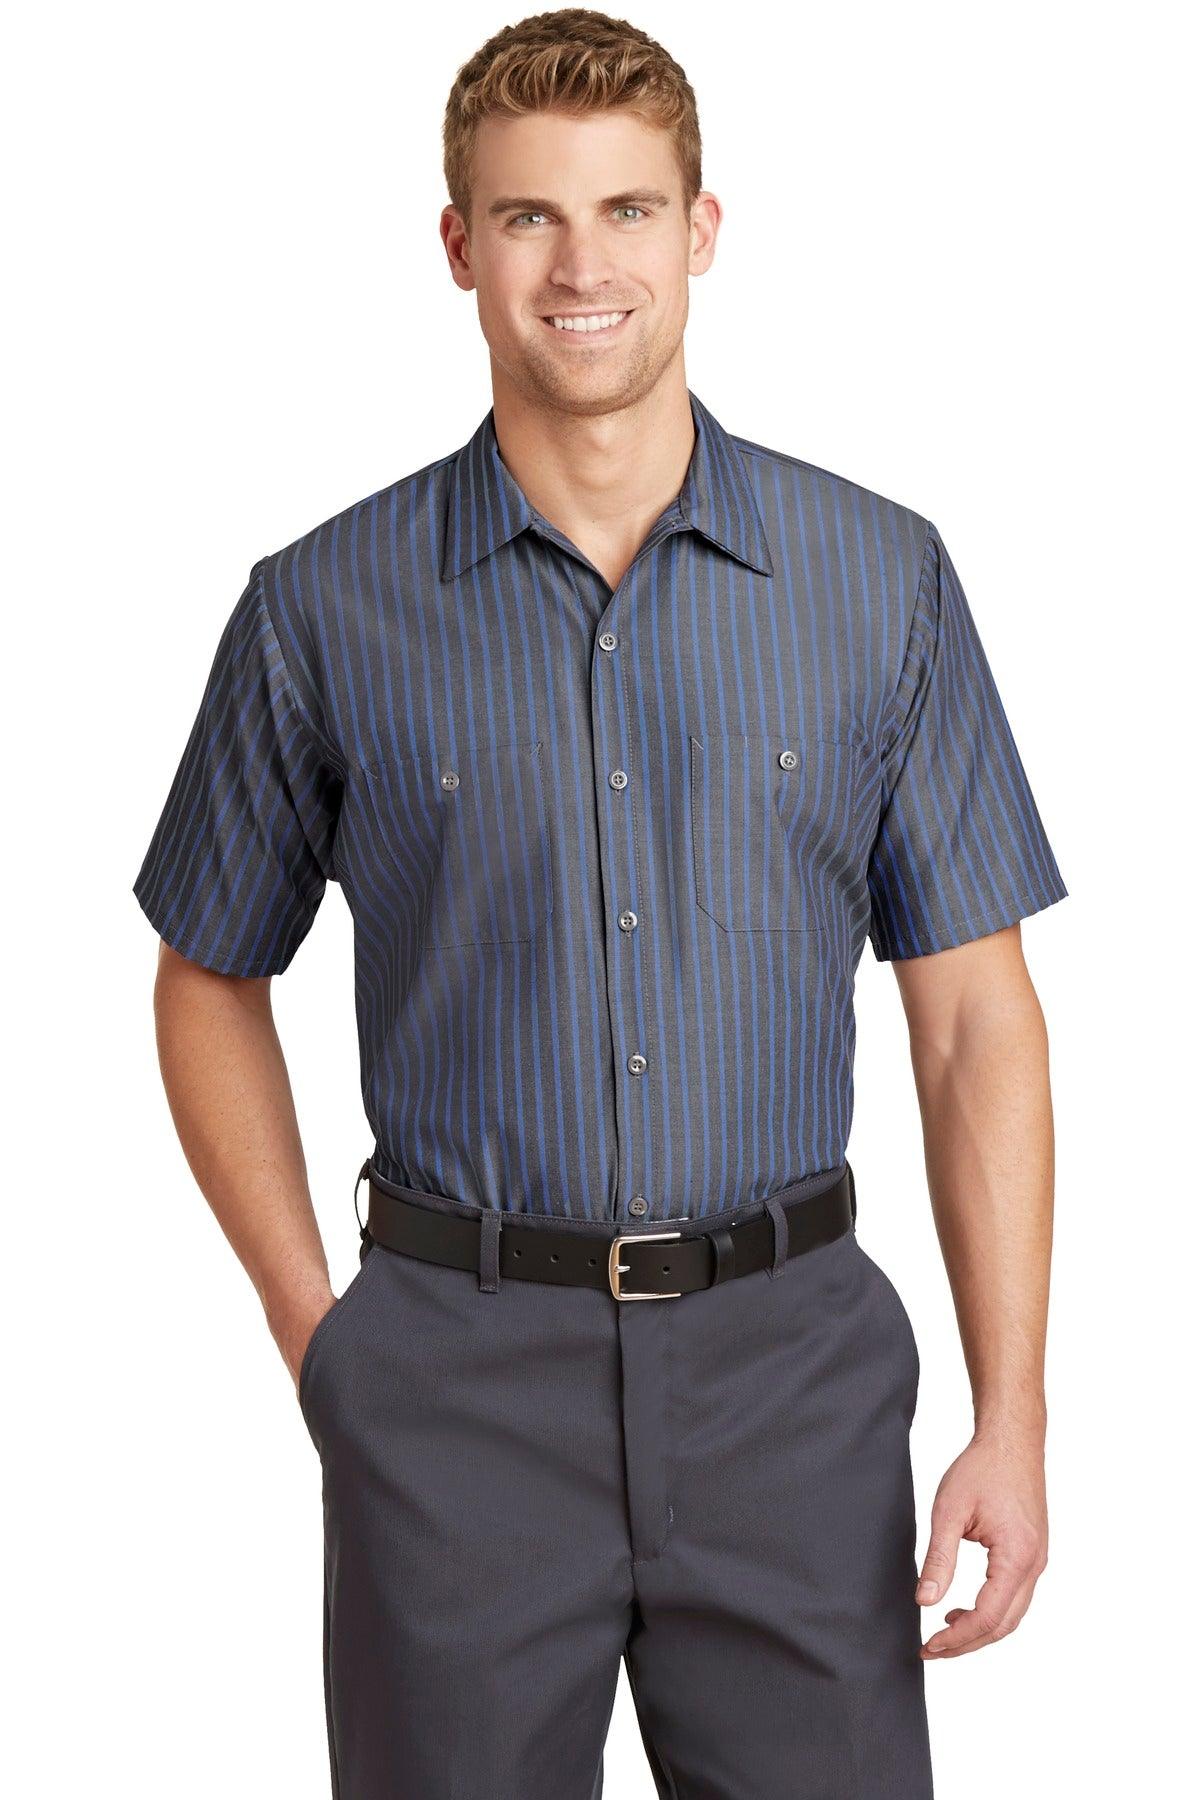 Red Kap Long Size, Short Sleeve Striped Industrial Work Shirt. CS20LONG - Dresses Max